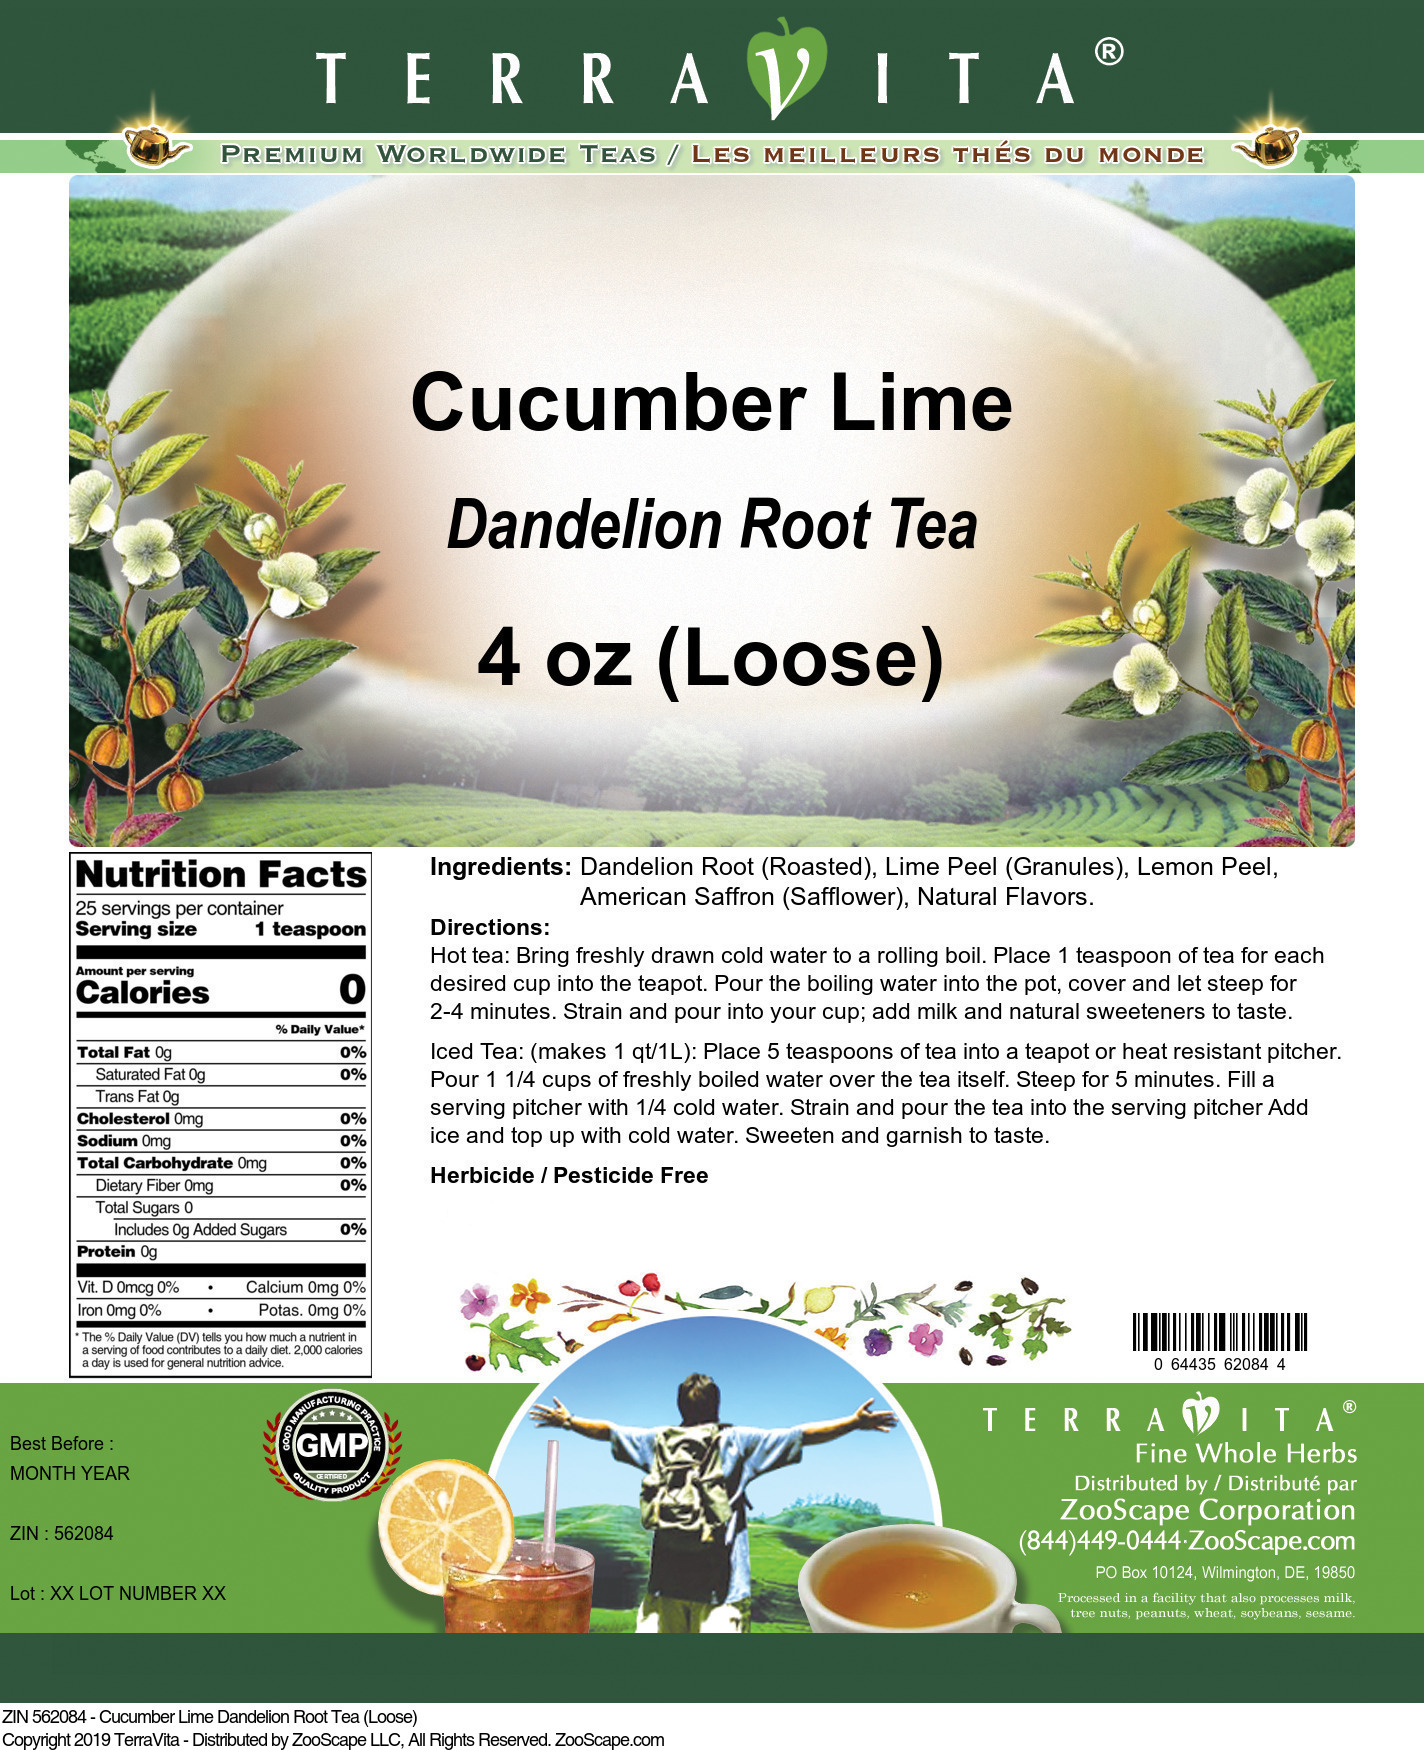 Cucumber Lime Dandelion Root Tea (Loose) - Label